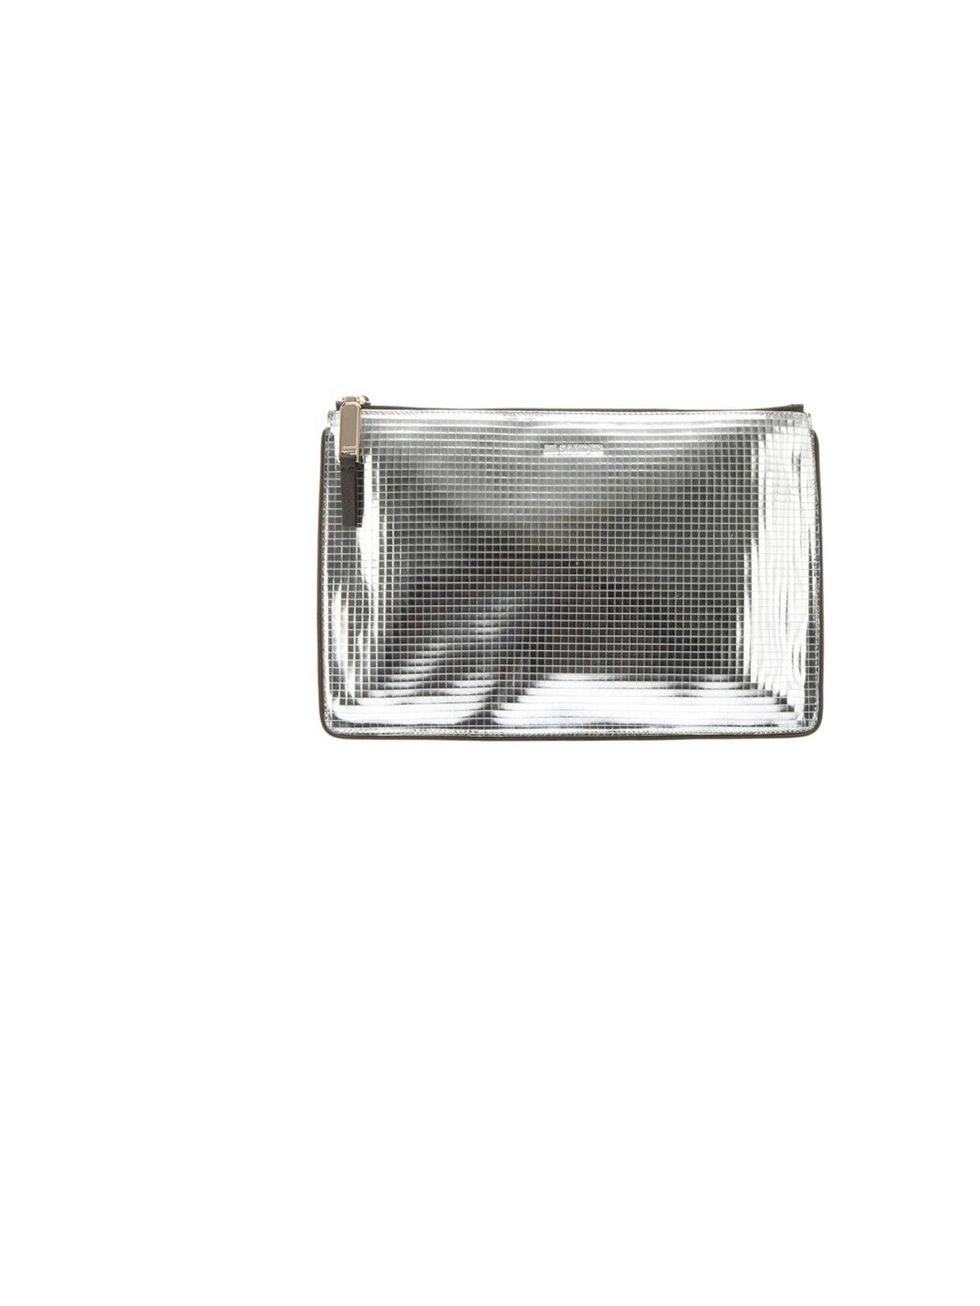 <p>Jil Sander metallic clutch, £274, at <a href="http://www.farfetch.com/shopping/women/jil-sander-metallic-clutch-item-10244155.aspx">Farfetch</a></p>